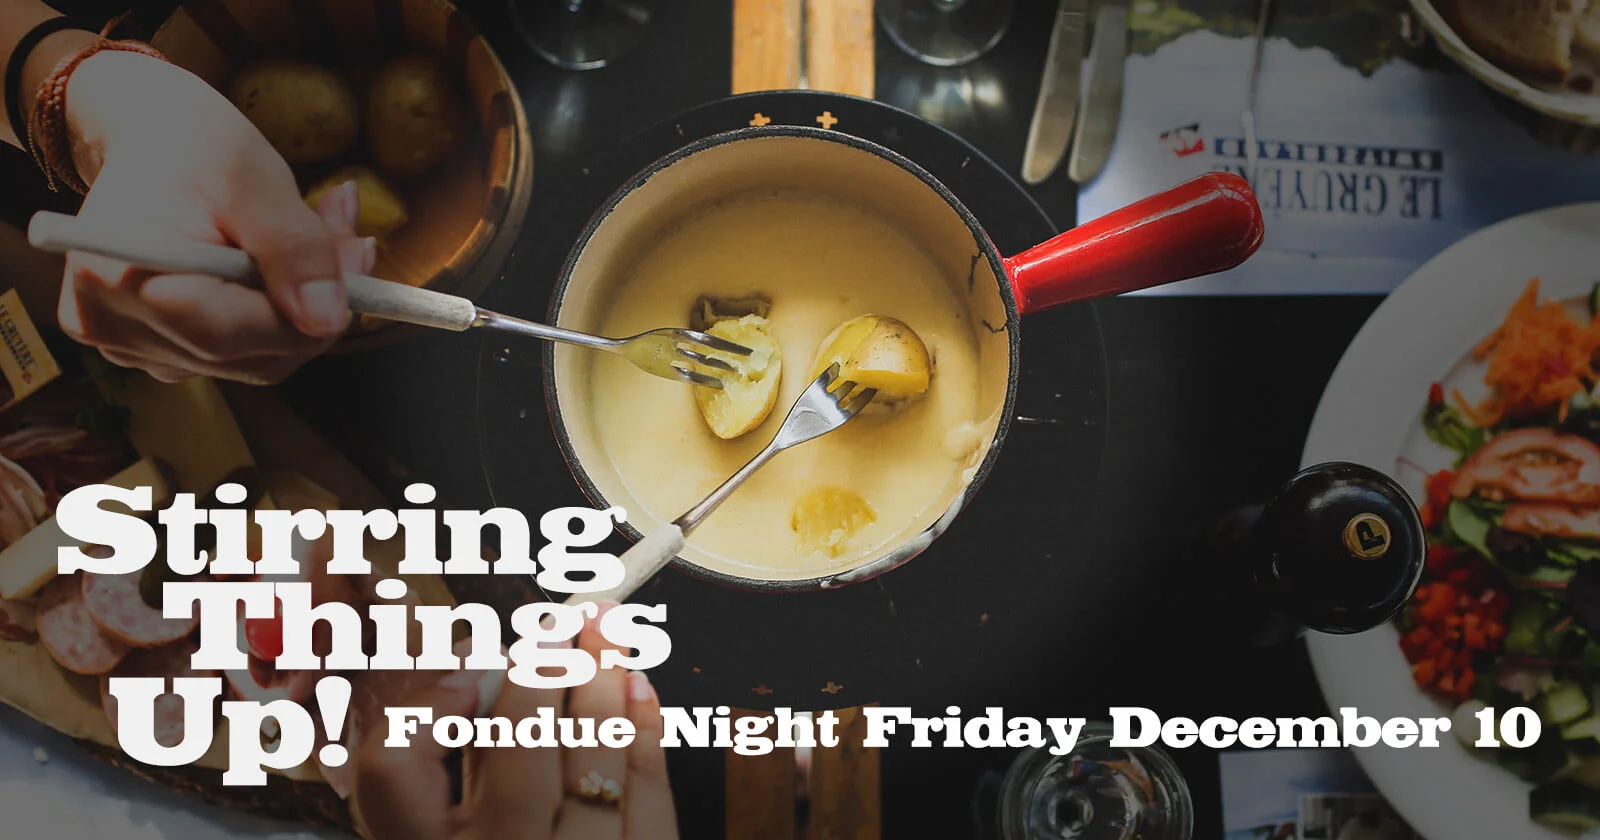 Fondue Night at The Scott Arms Kingston December 10th 2021